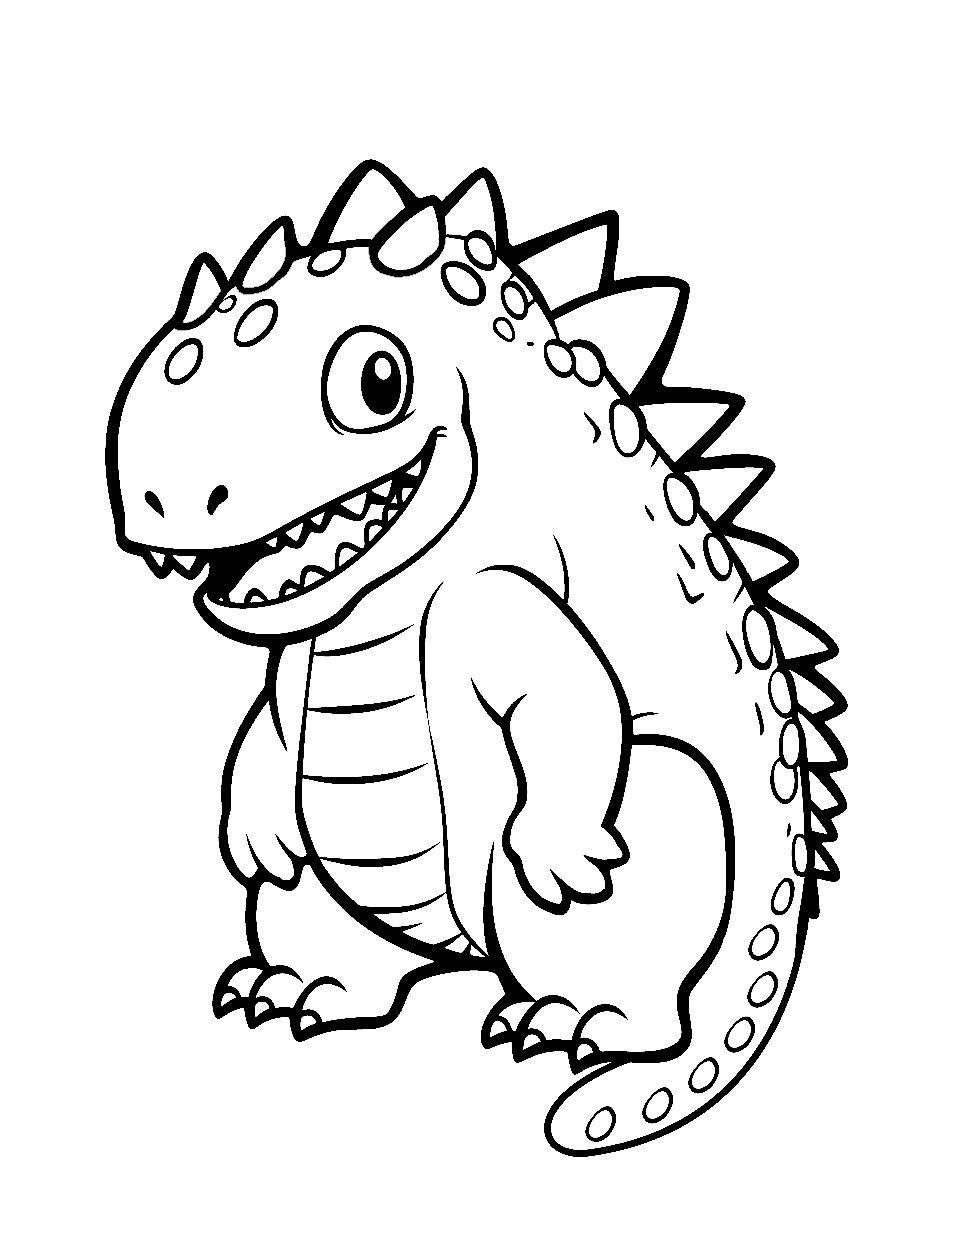 Drawing Godzilla Demo - Easy Drawings - YouTube